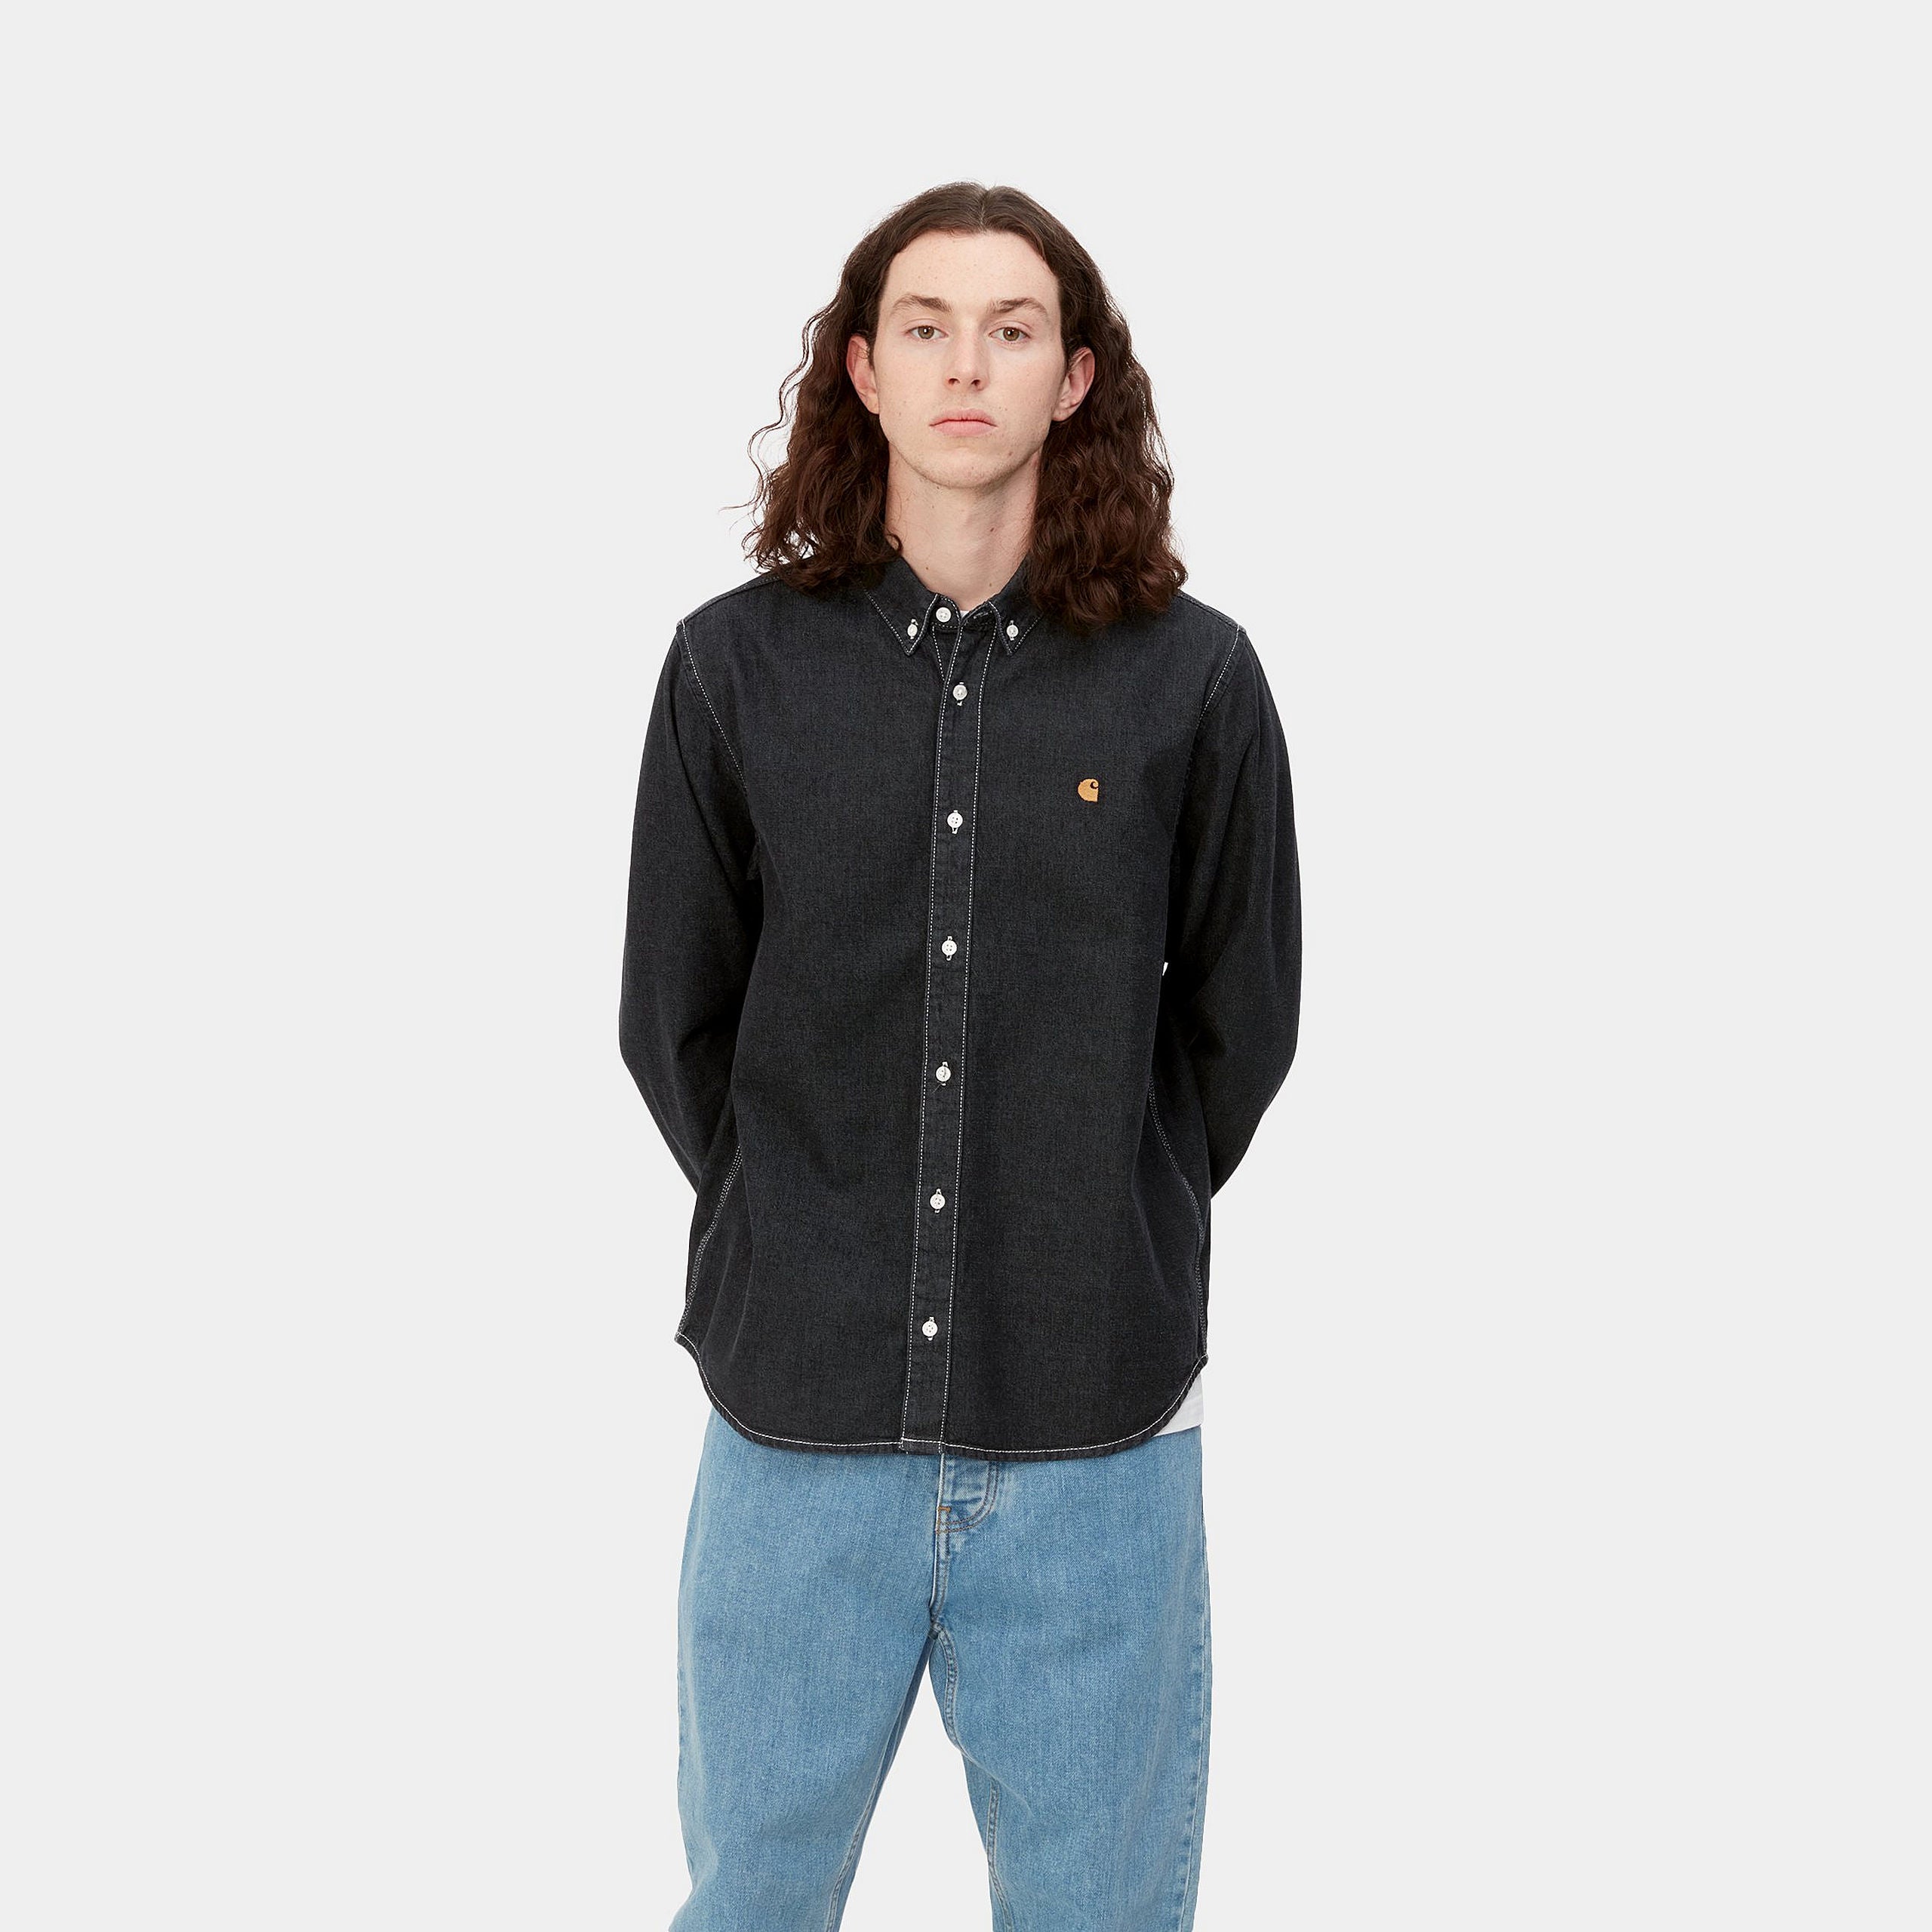 Weldon Long Sleeve Black Shirt